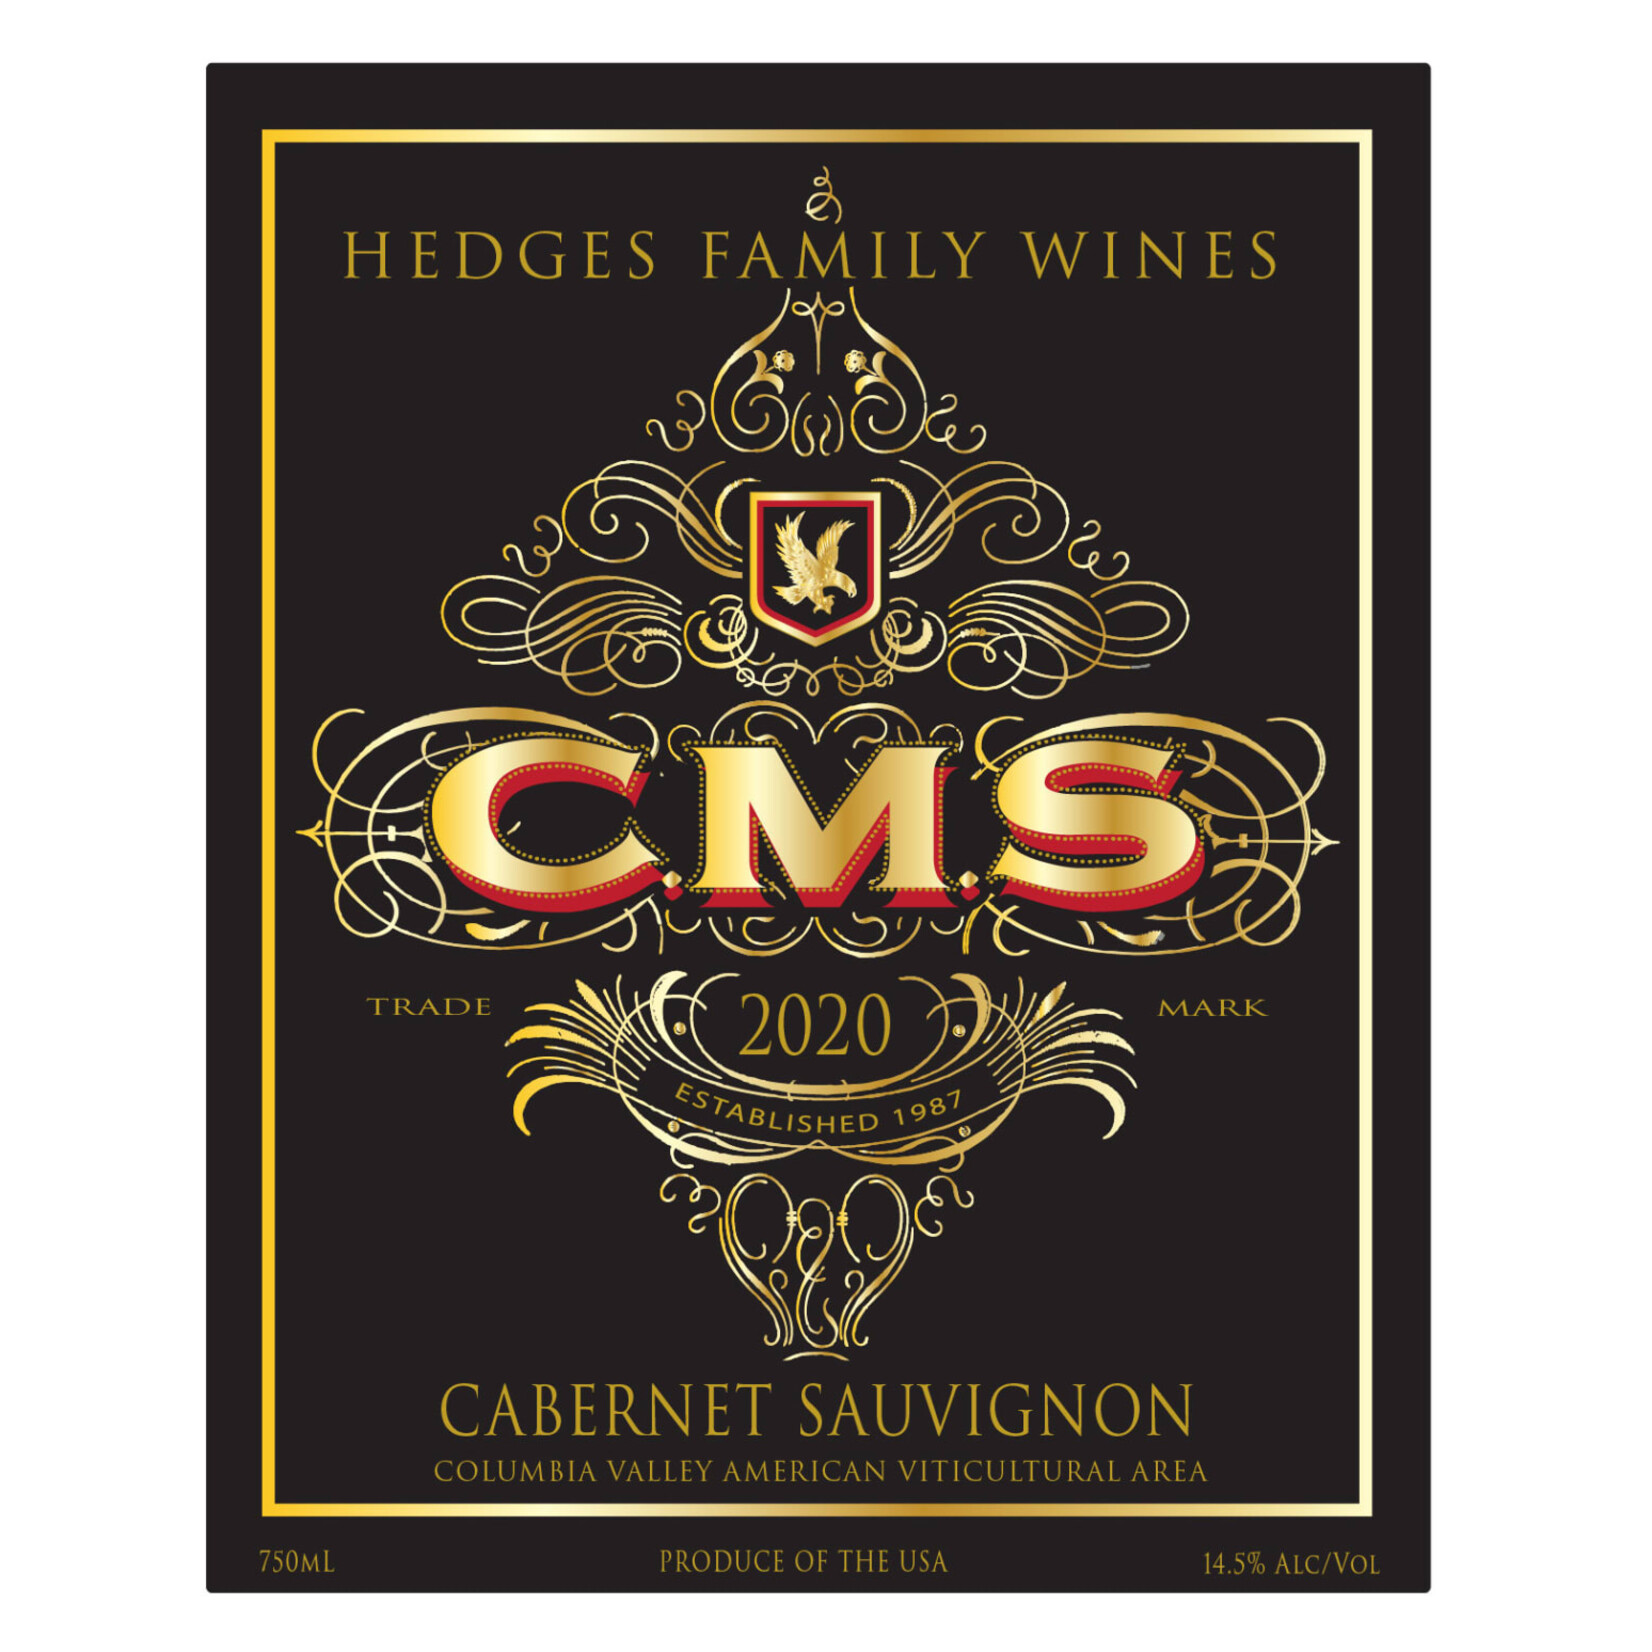 Hedges Family Estate CMS Cabernet Sauvignon 2020 Columbia Valley,  Washington